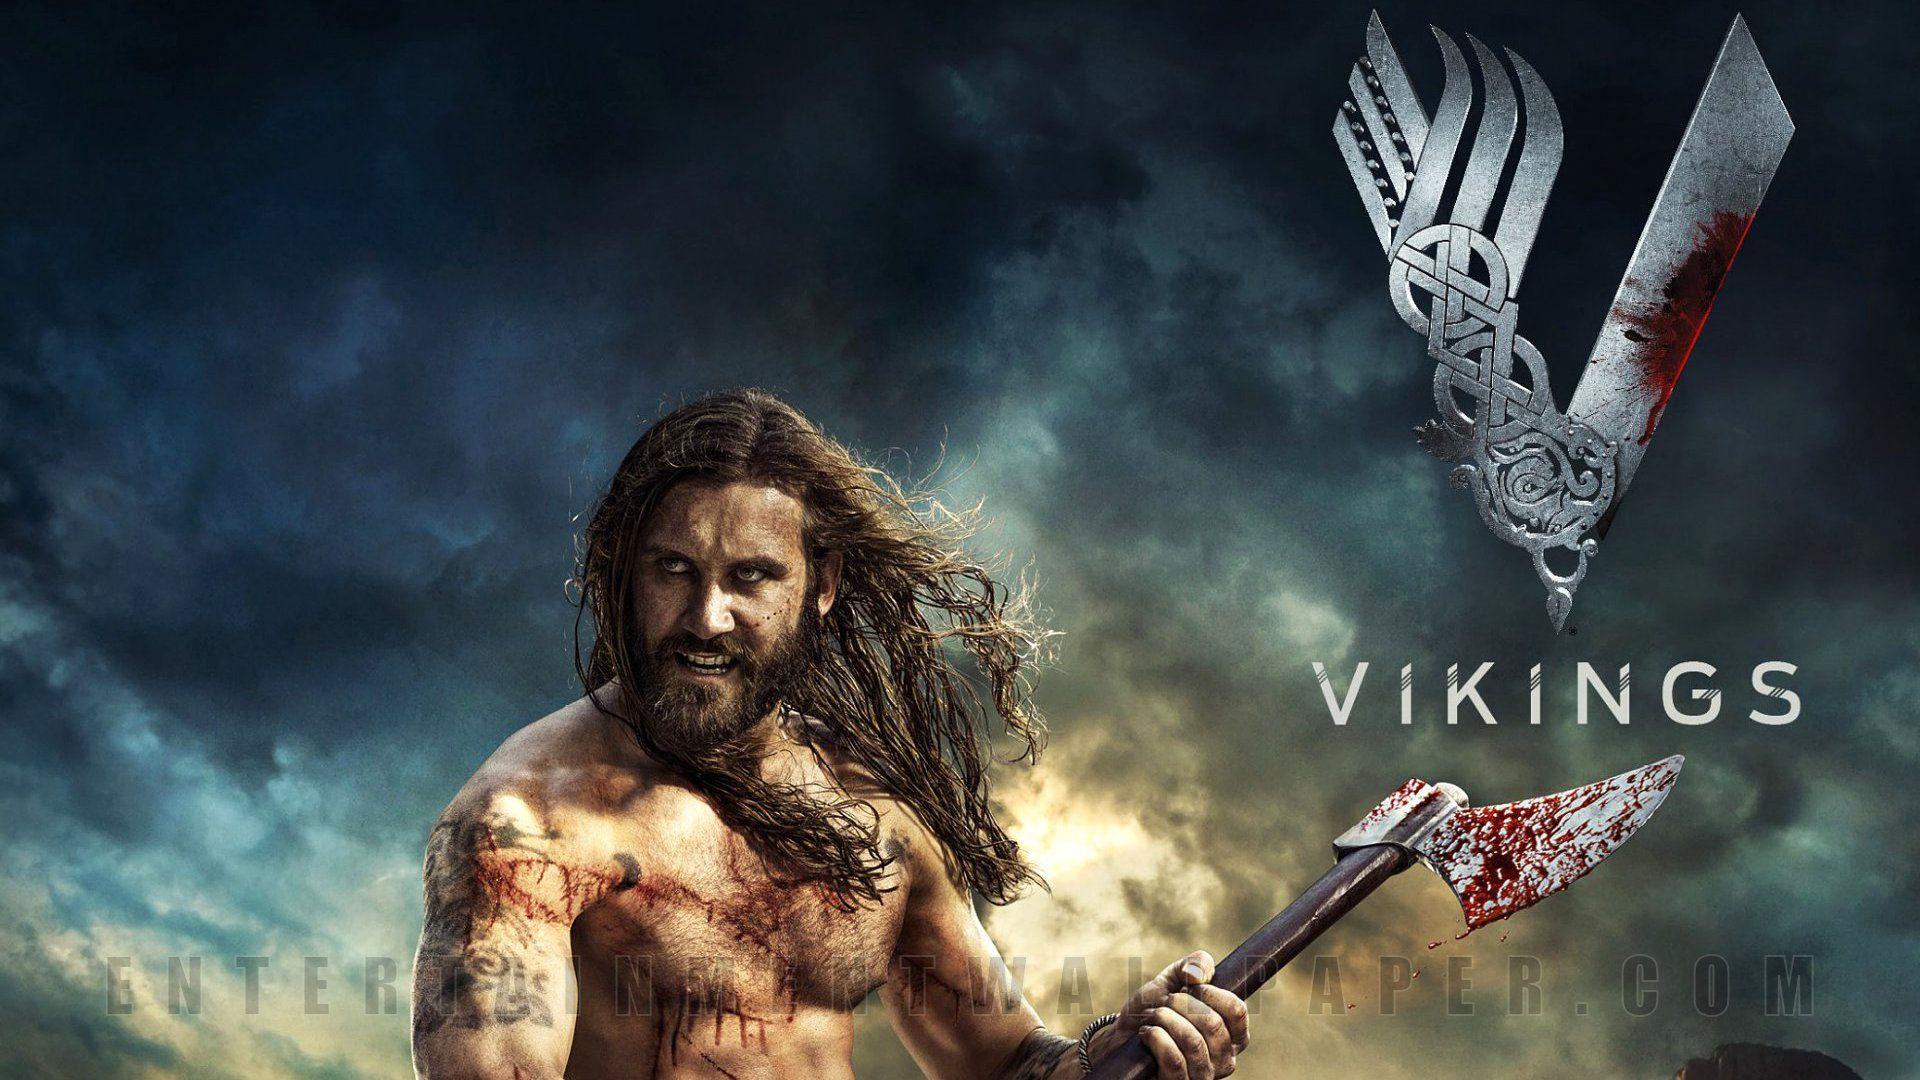 Vikings Wallpaper size, download now. Films